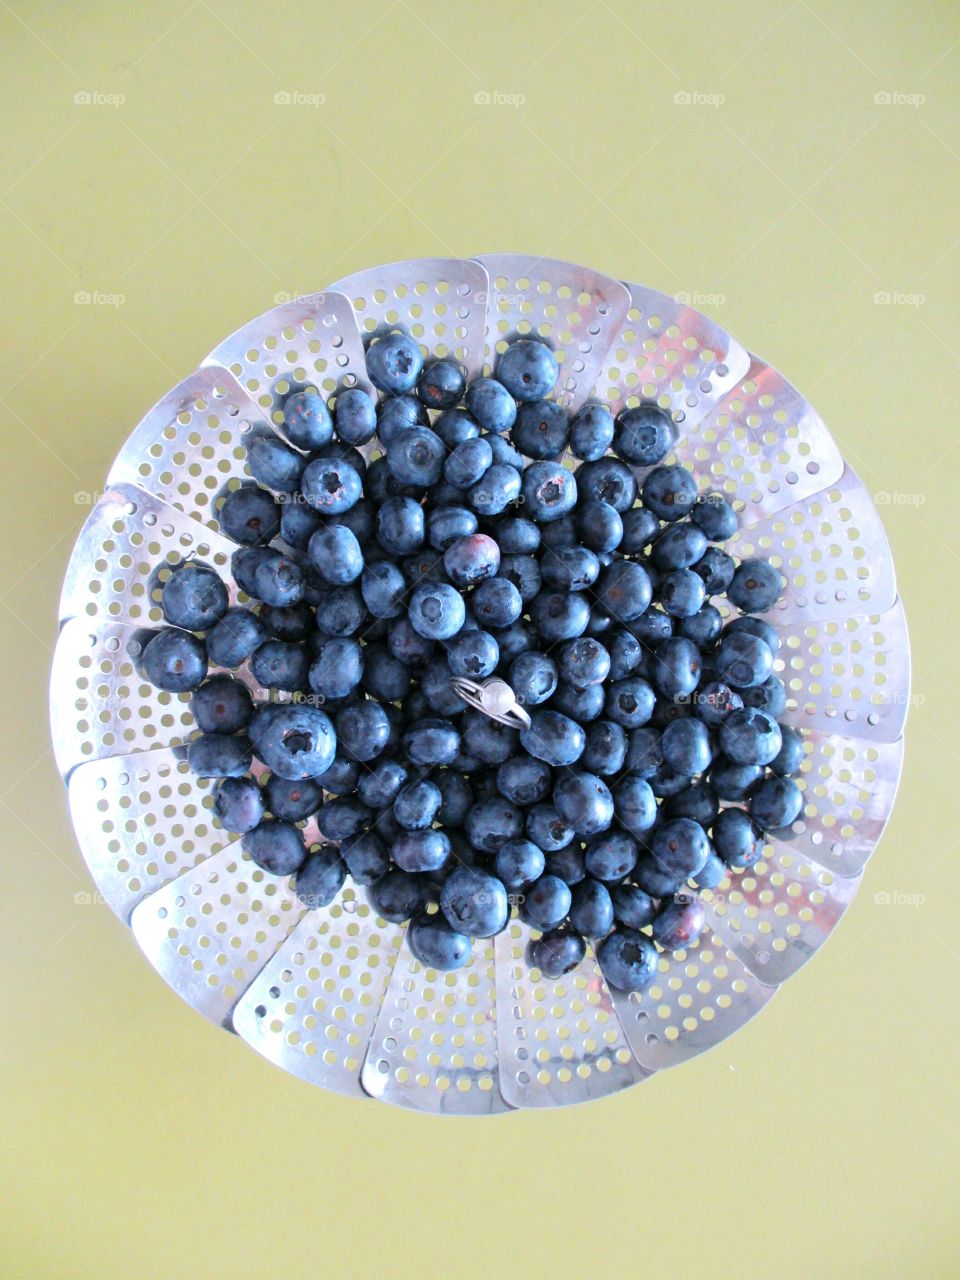 Blueberries in sieve